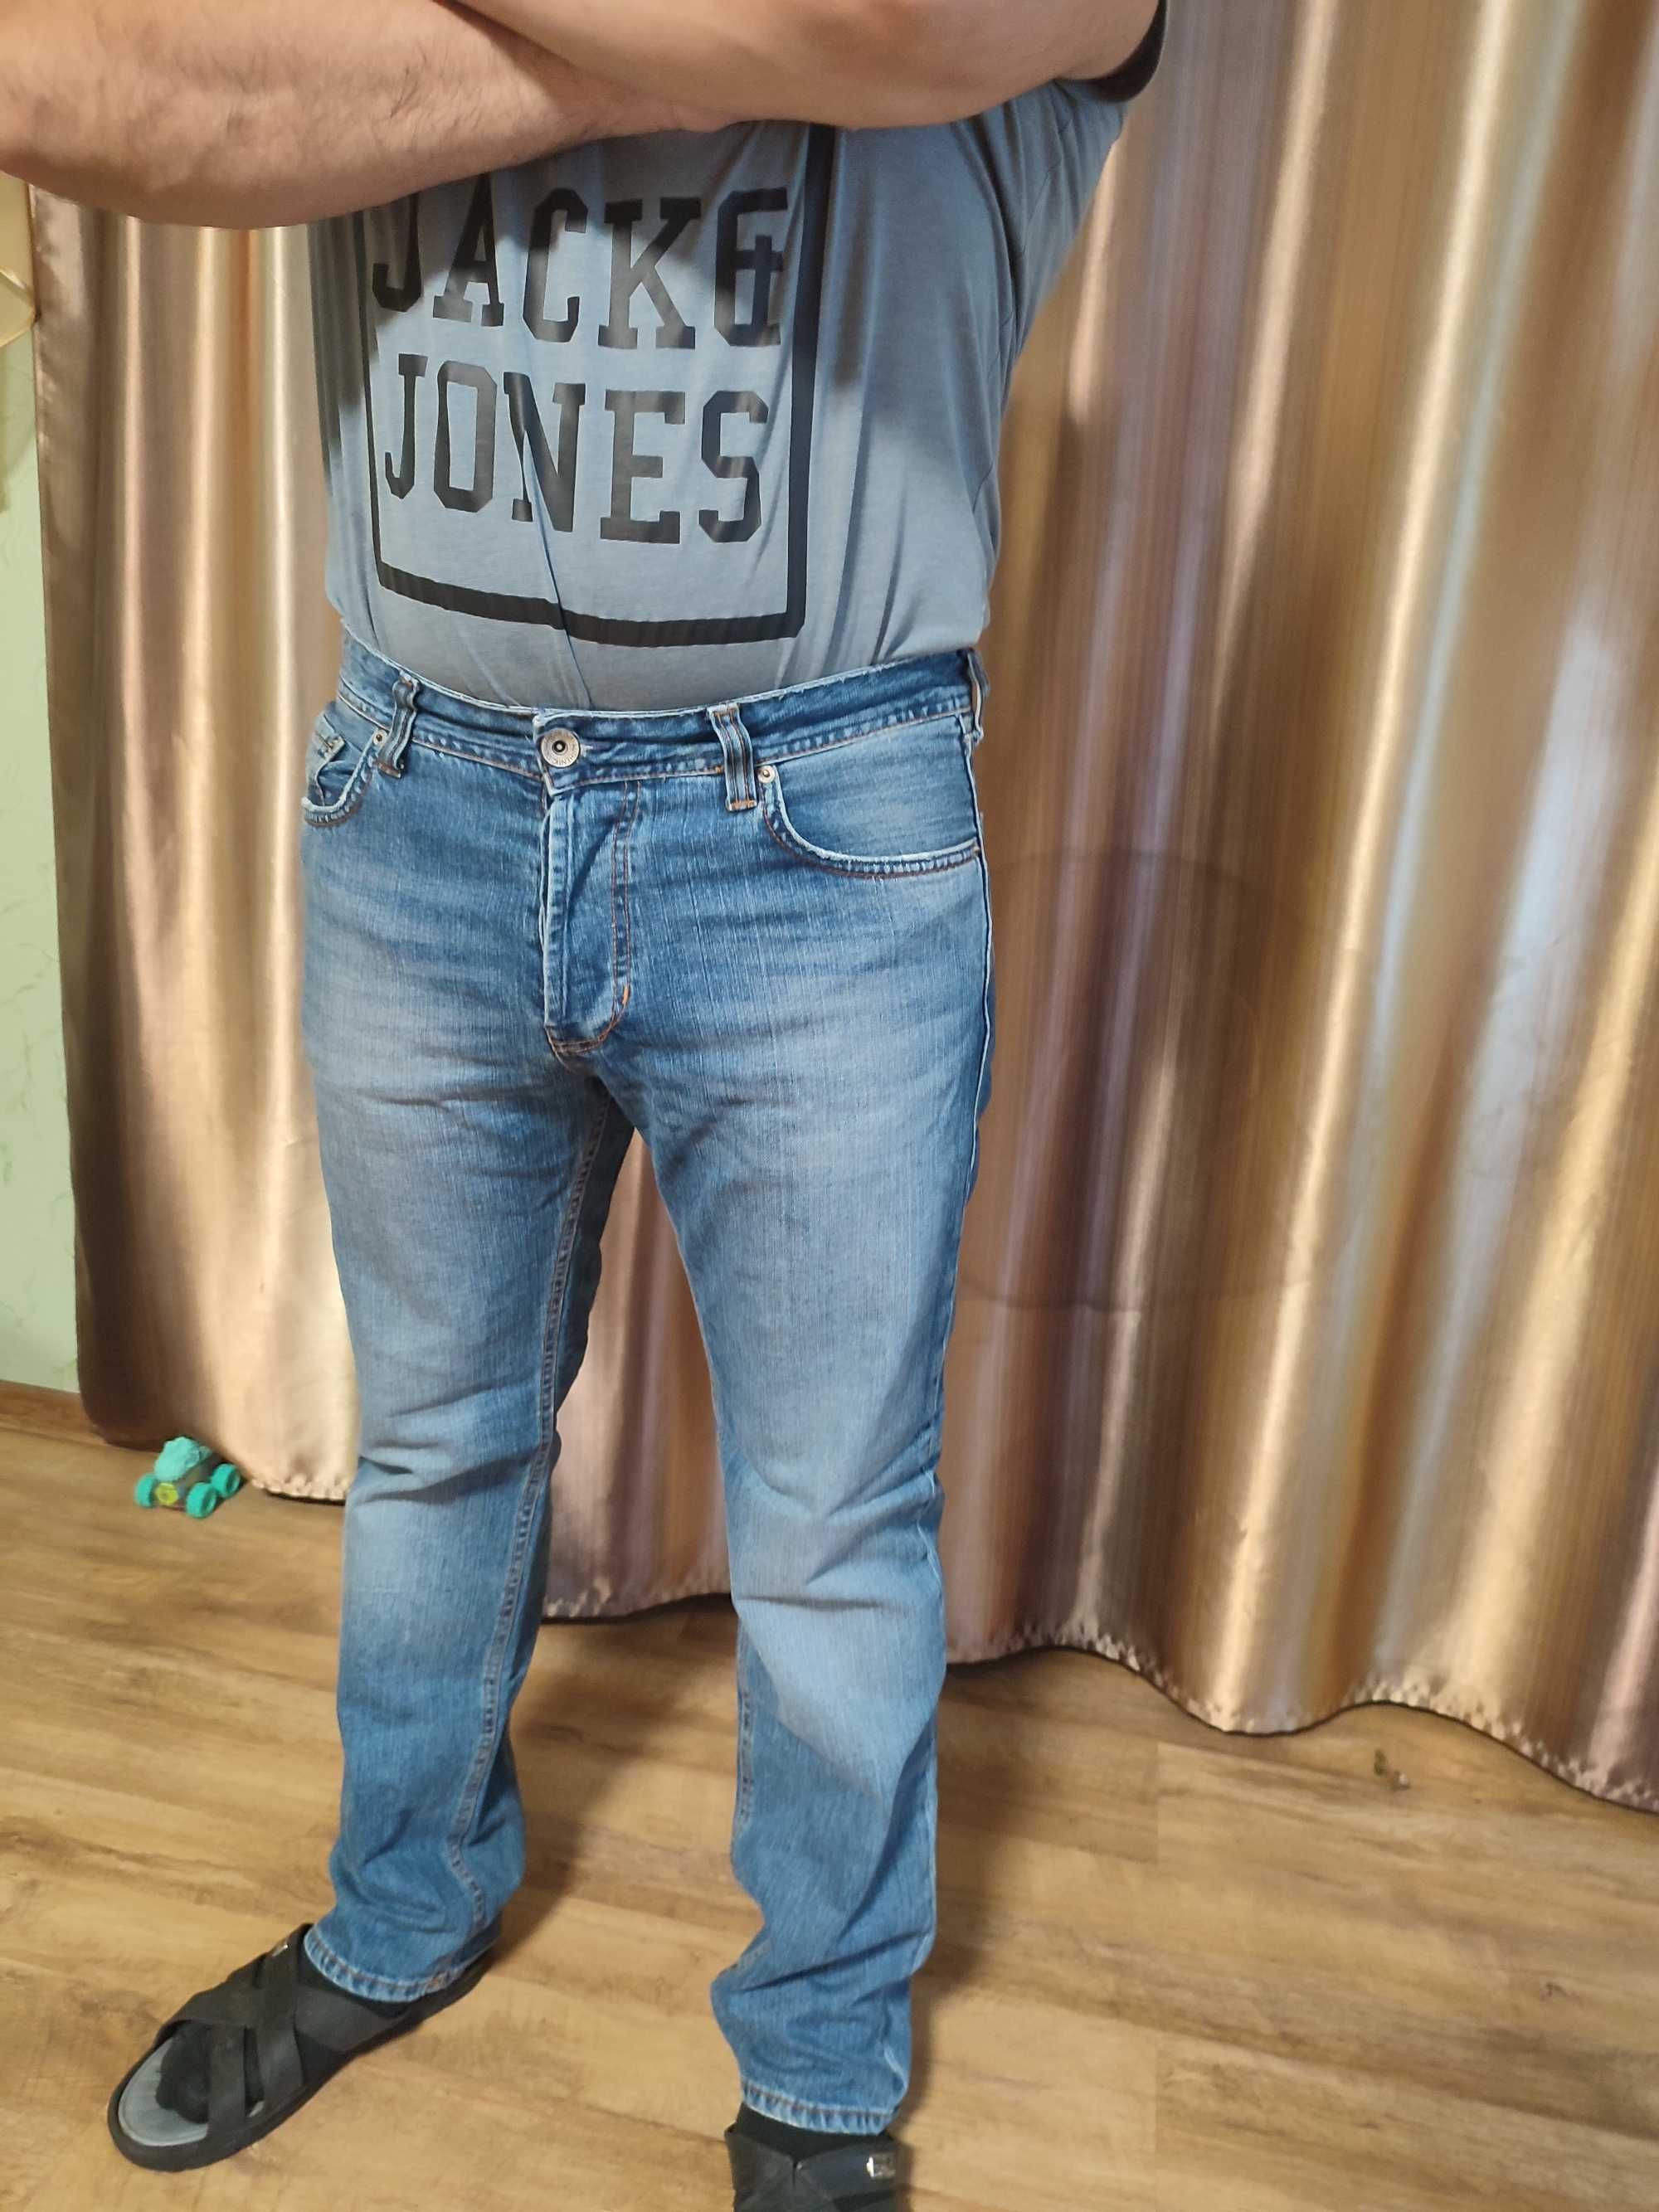 Colin's джинсы на мужчину